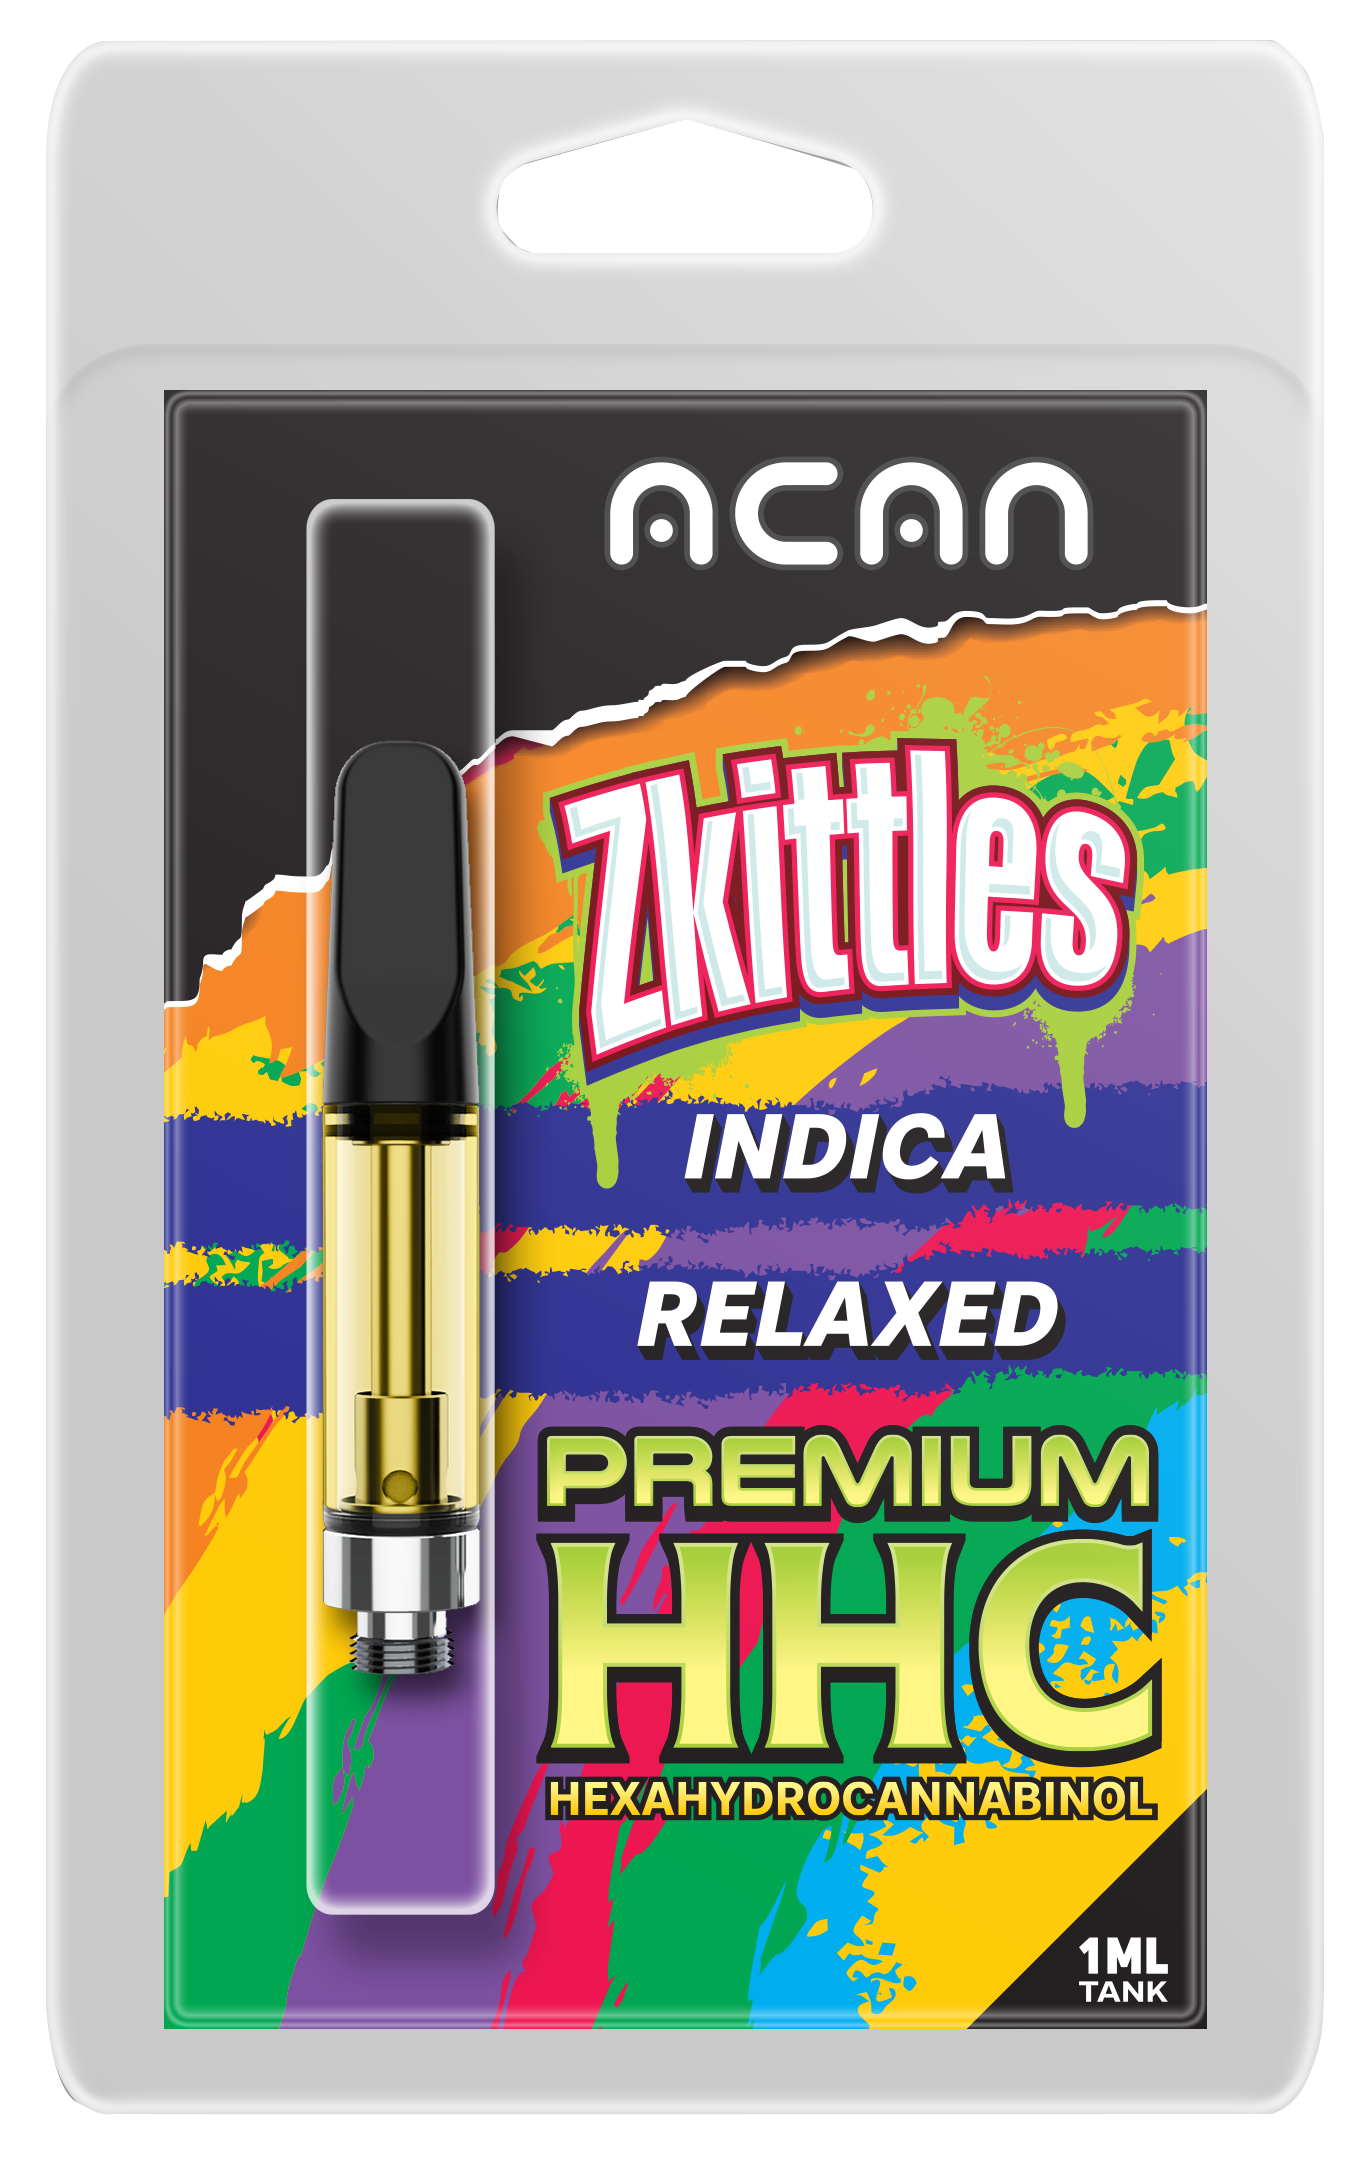 Zkittles Premium HHC